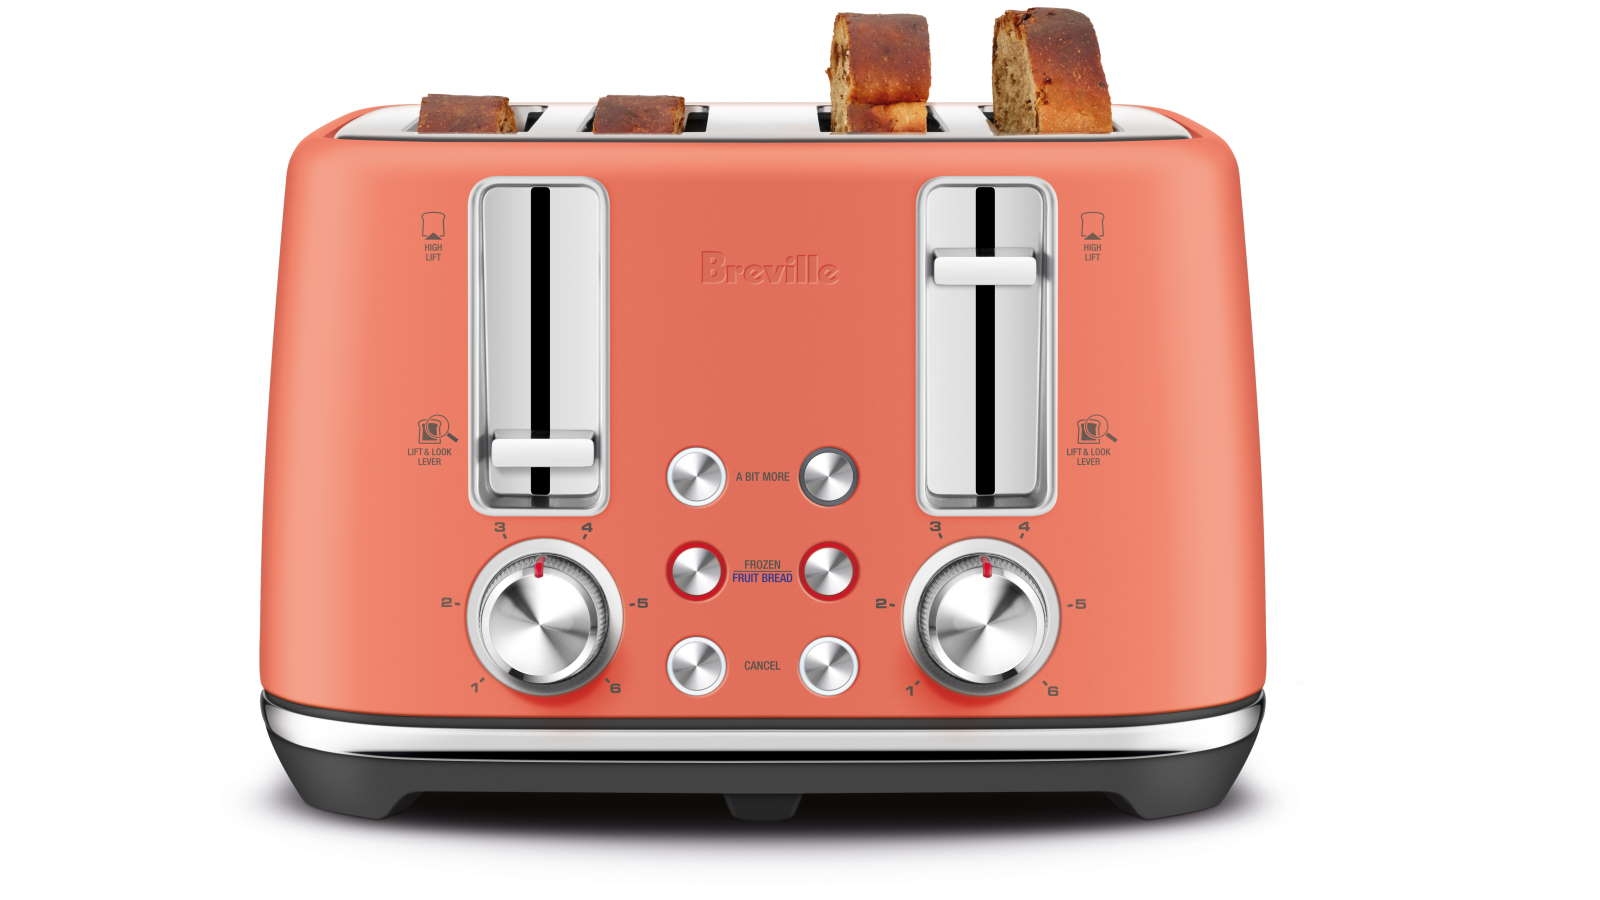 Breville the ToastSet 4 Slice Toaster - Black